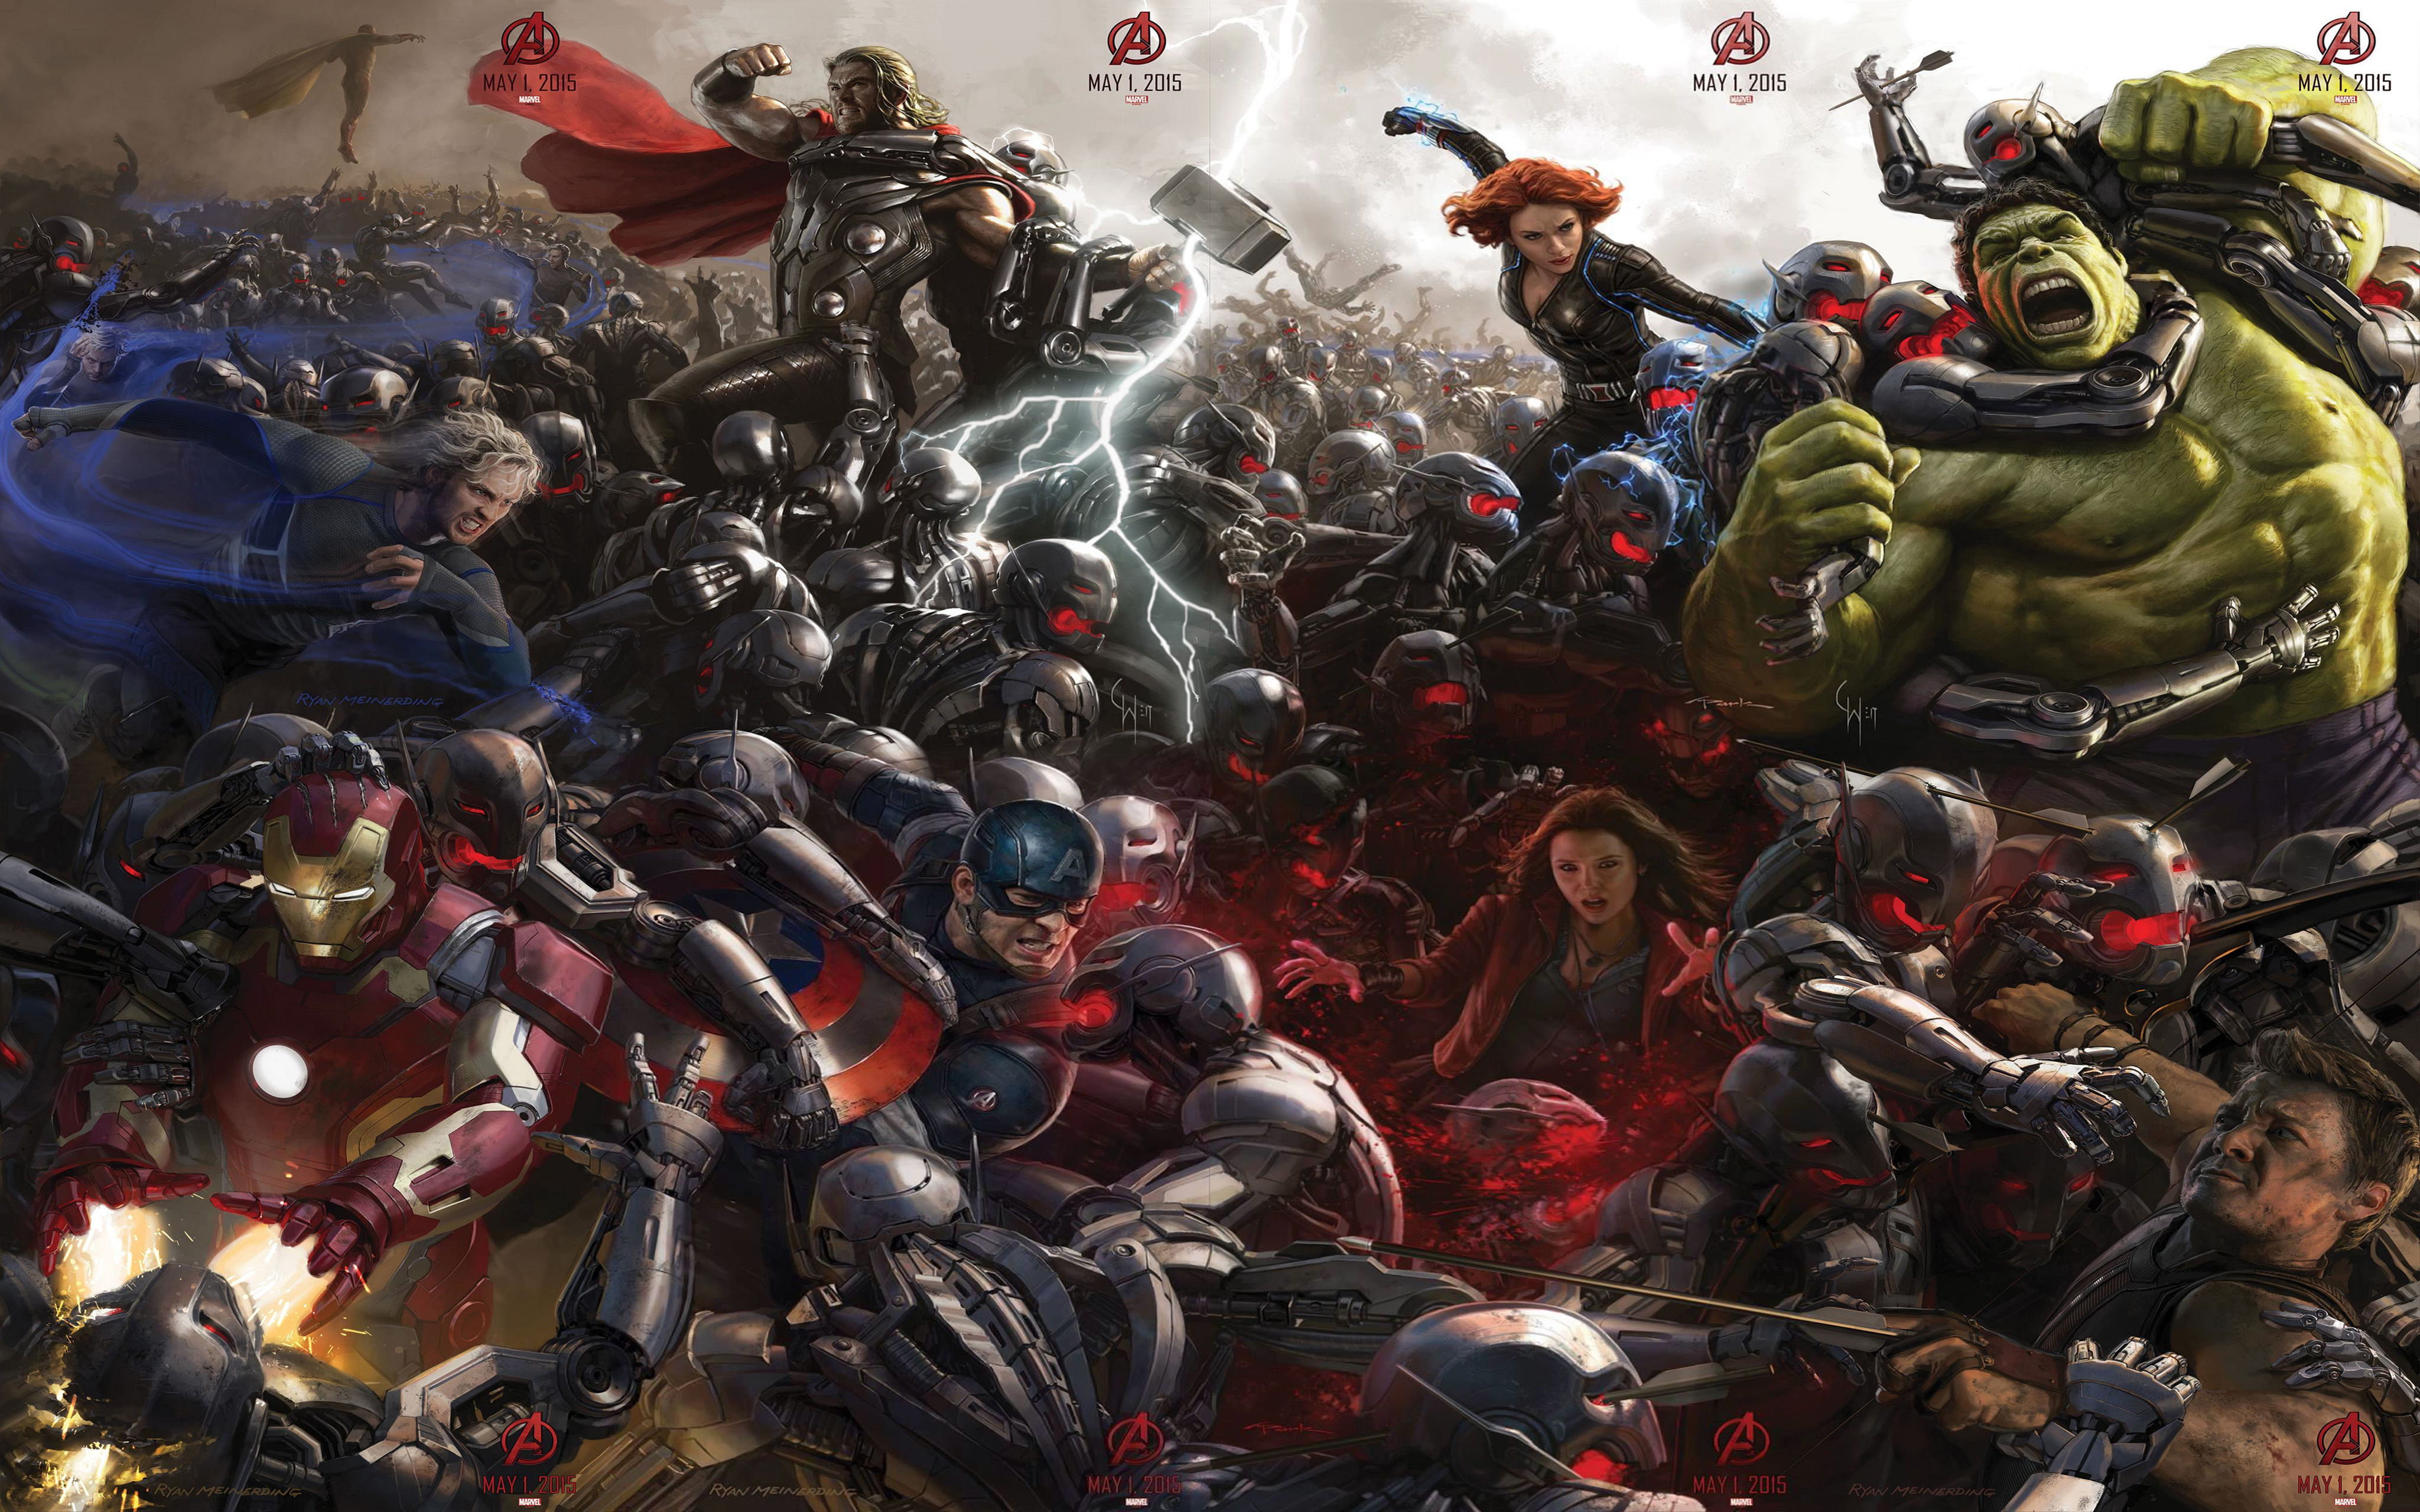 Marvel The Avengers Age Of Ultroniron Battle Poster Art Hd Wallpaper For  Desktop 4096x2560 : 